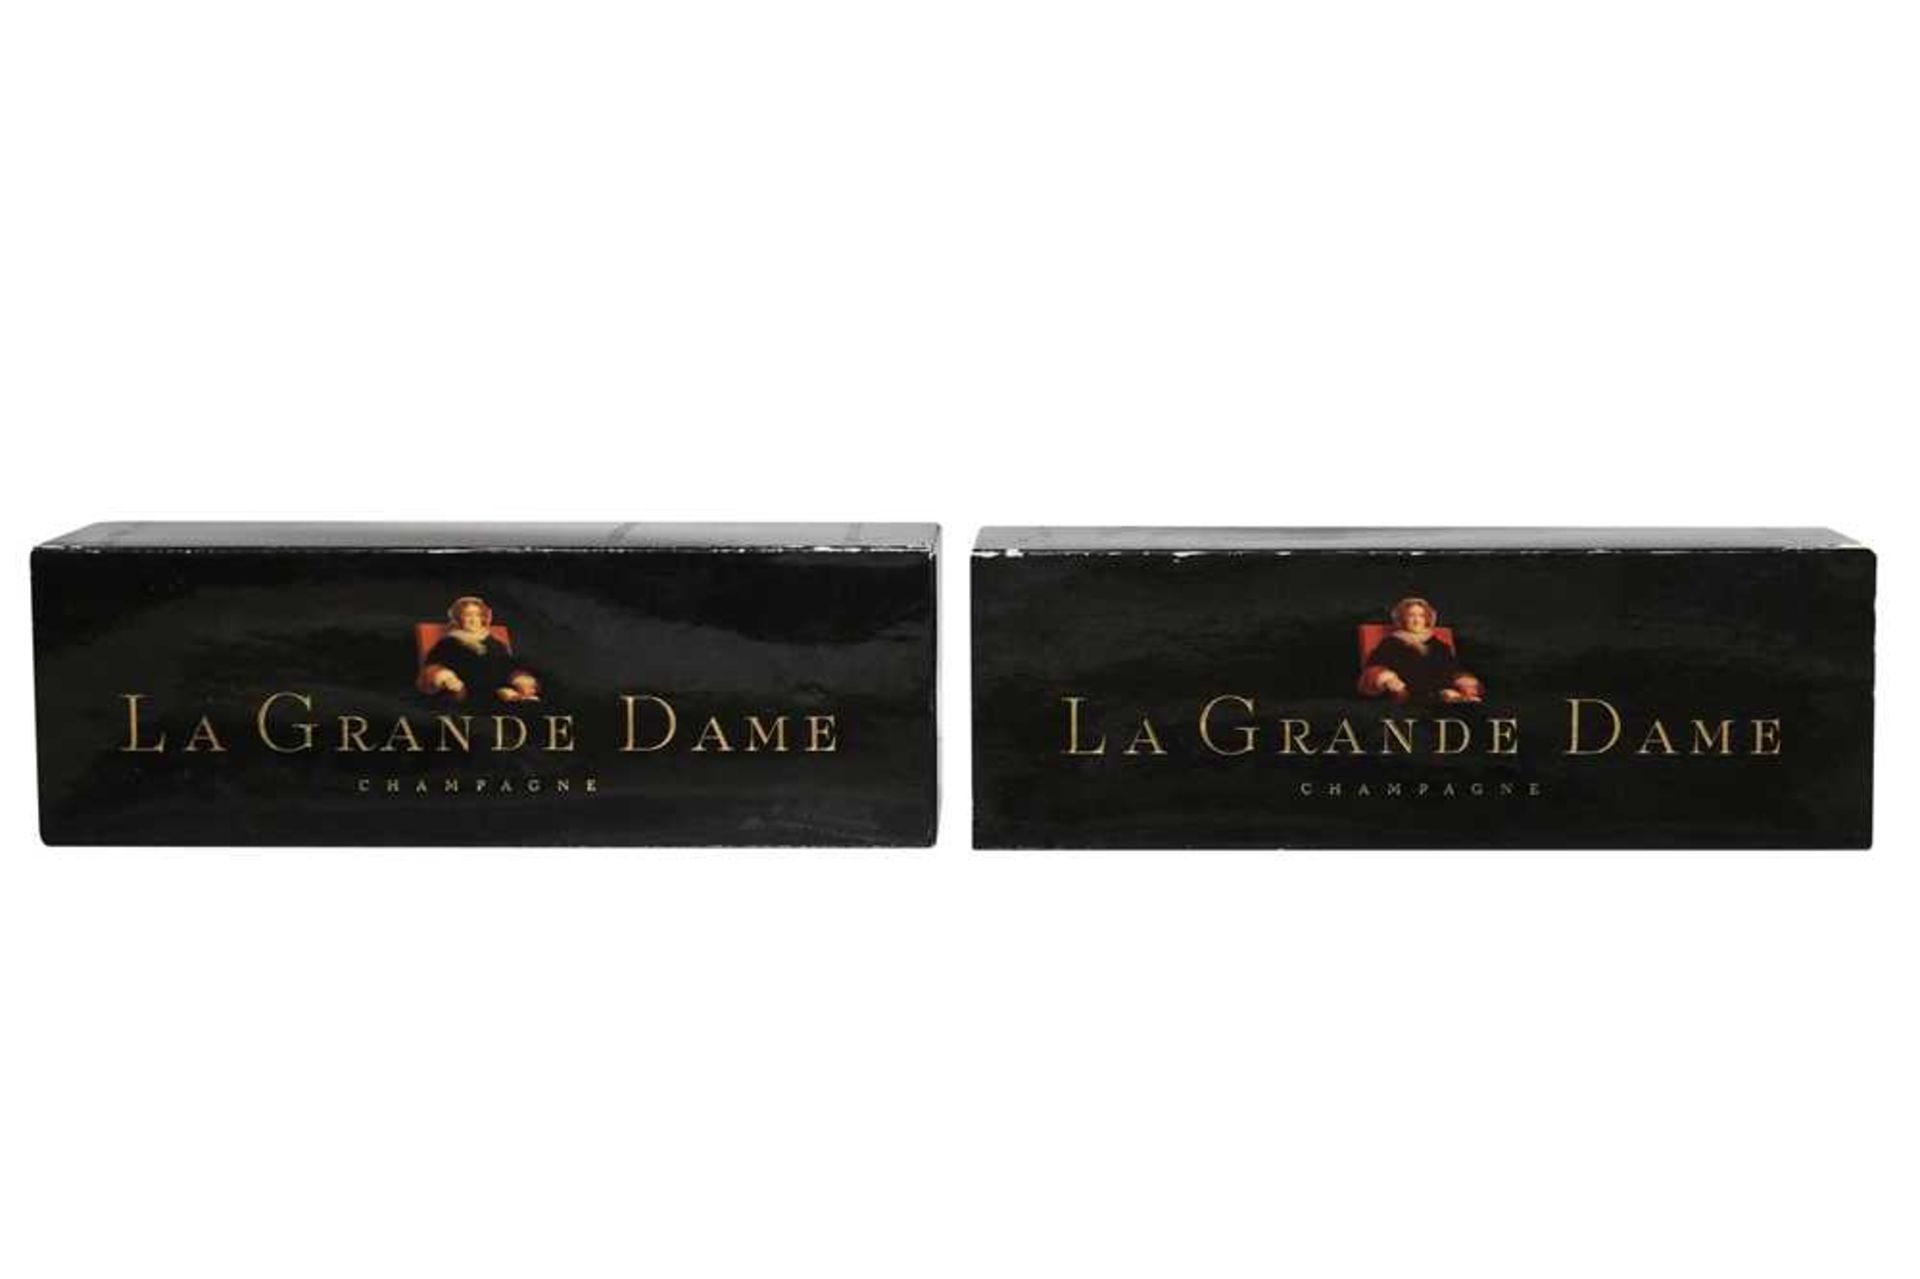 Veuve Clicquot Ponsardin, La Grande Dame, Reims, 1983, two bottles in original boxes - Image 2 of 2